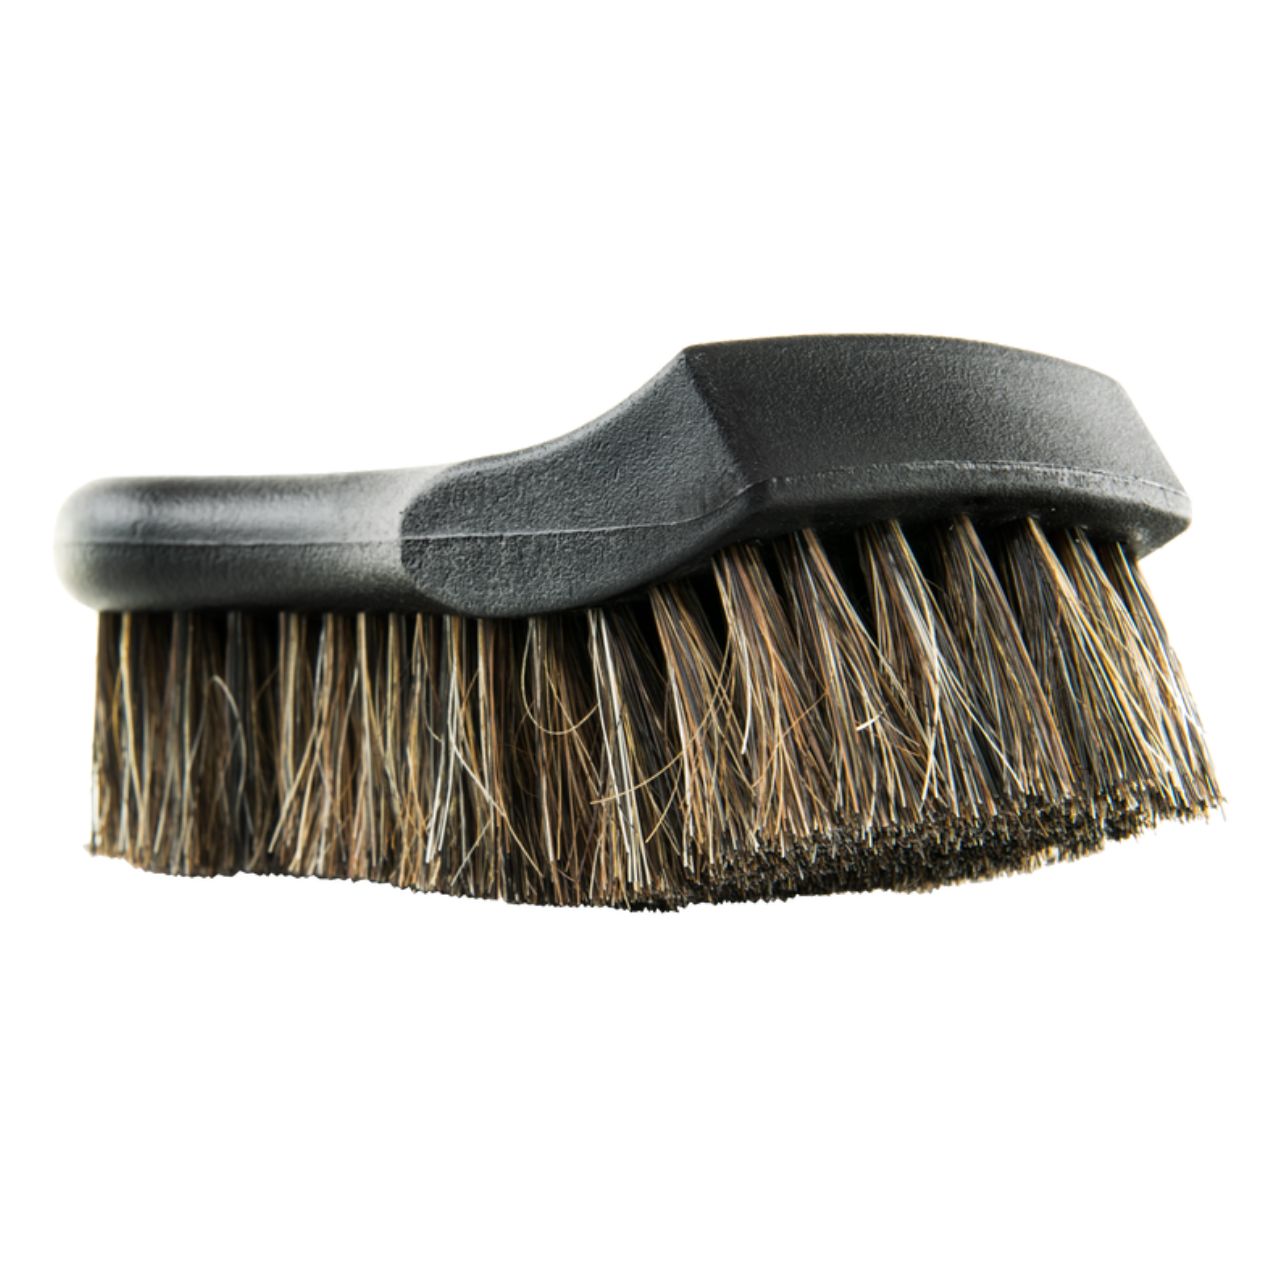 Chemical Guys Premium Select Horse Hair Cleaning Brush